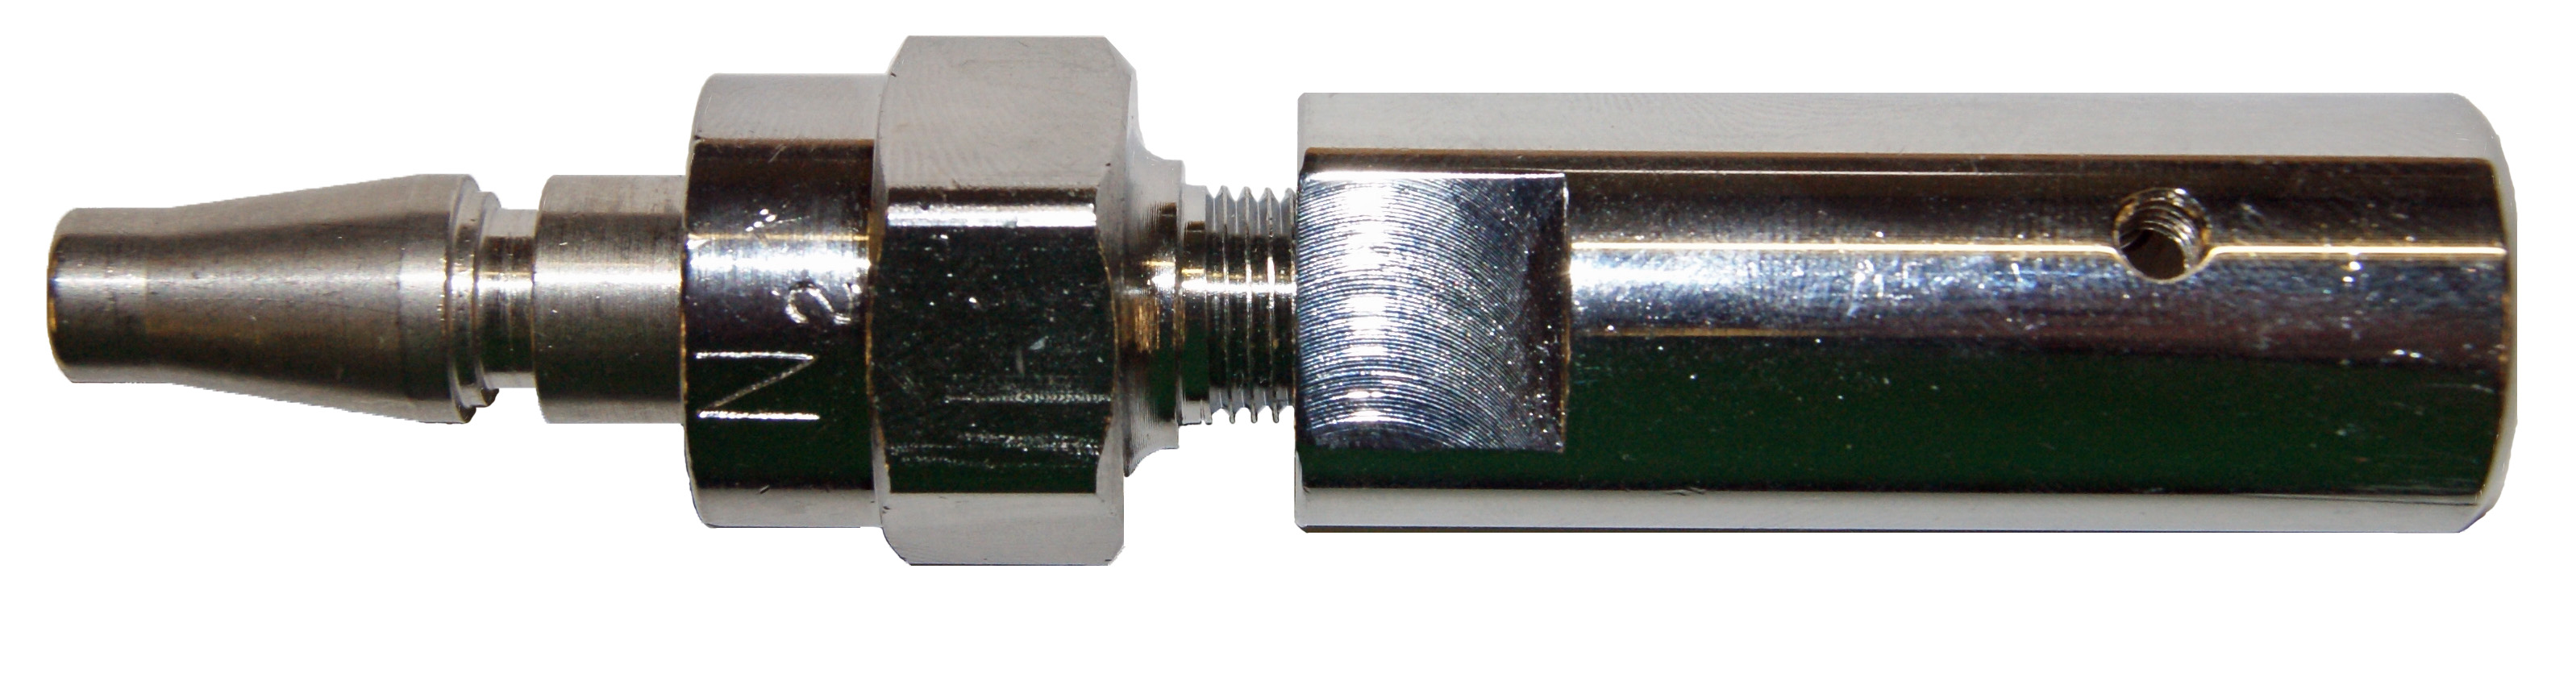 Schrader to Compressed Gas Adapter